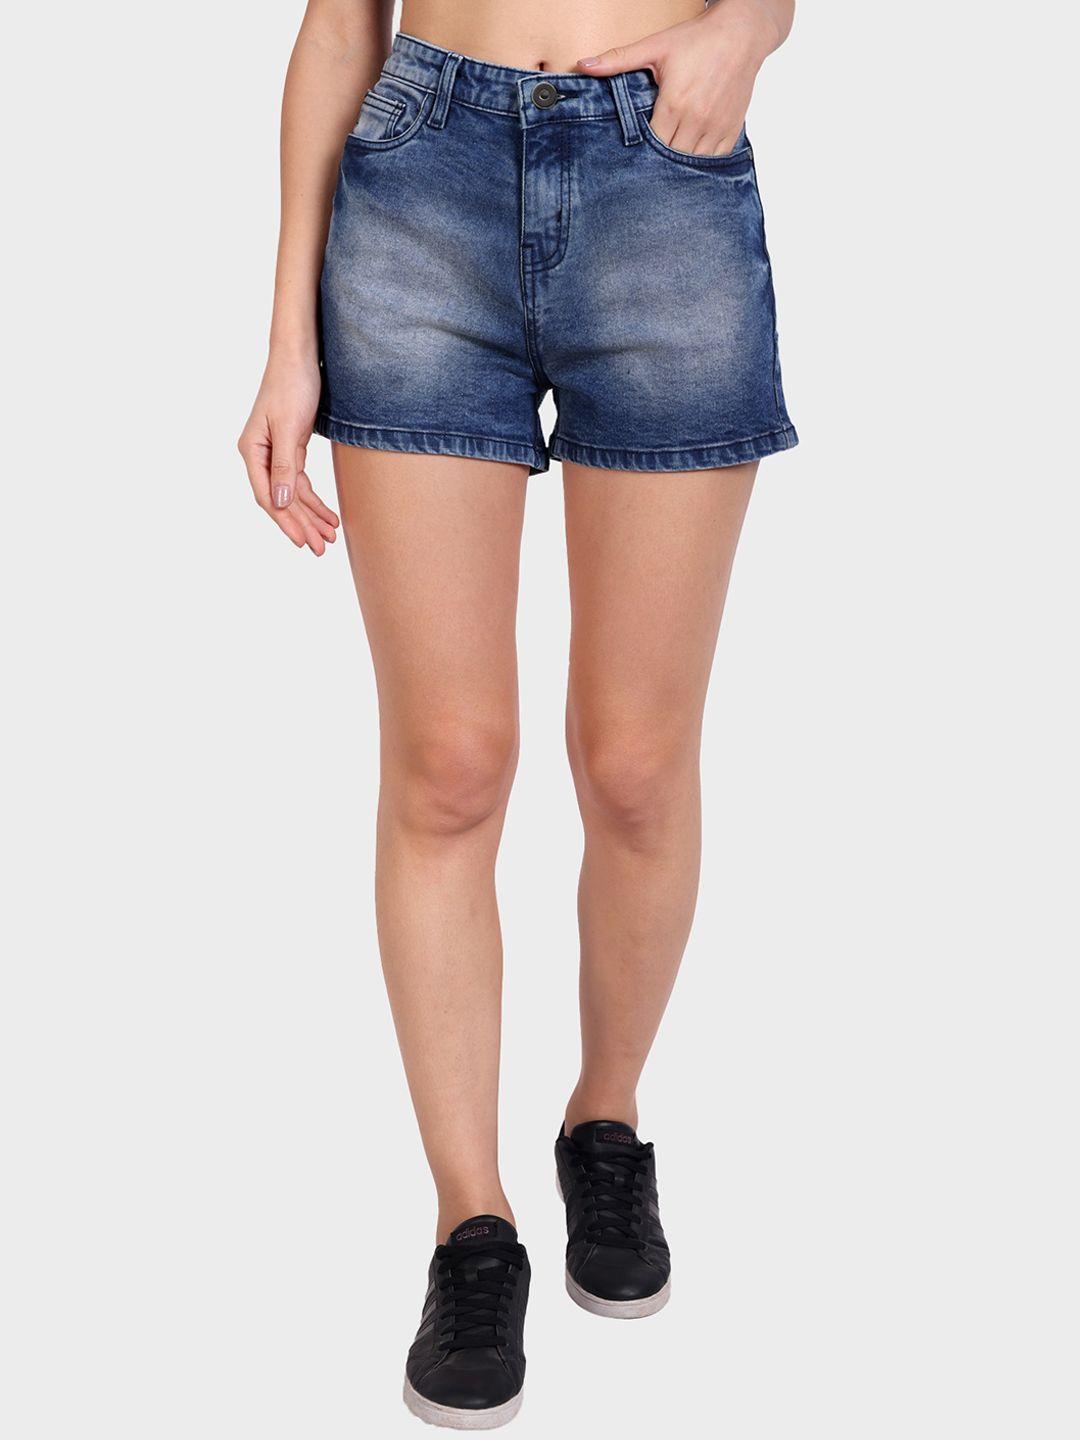 dressberry-women-navy-blue-washed-mid-rise-denim-shorts